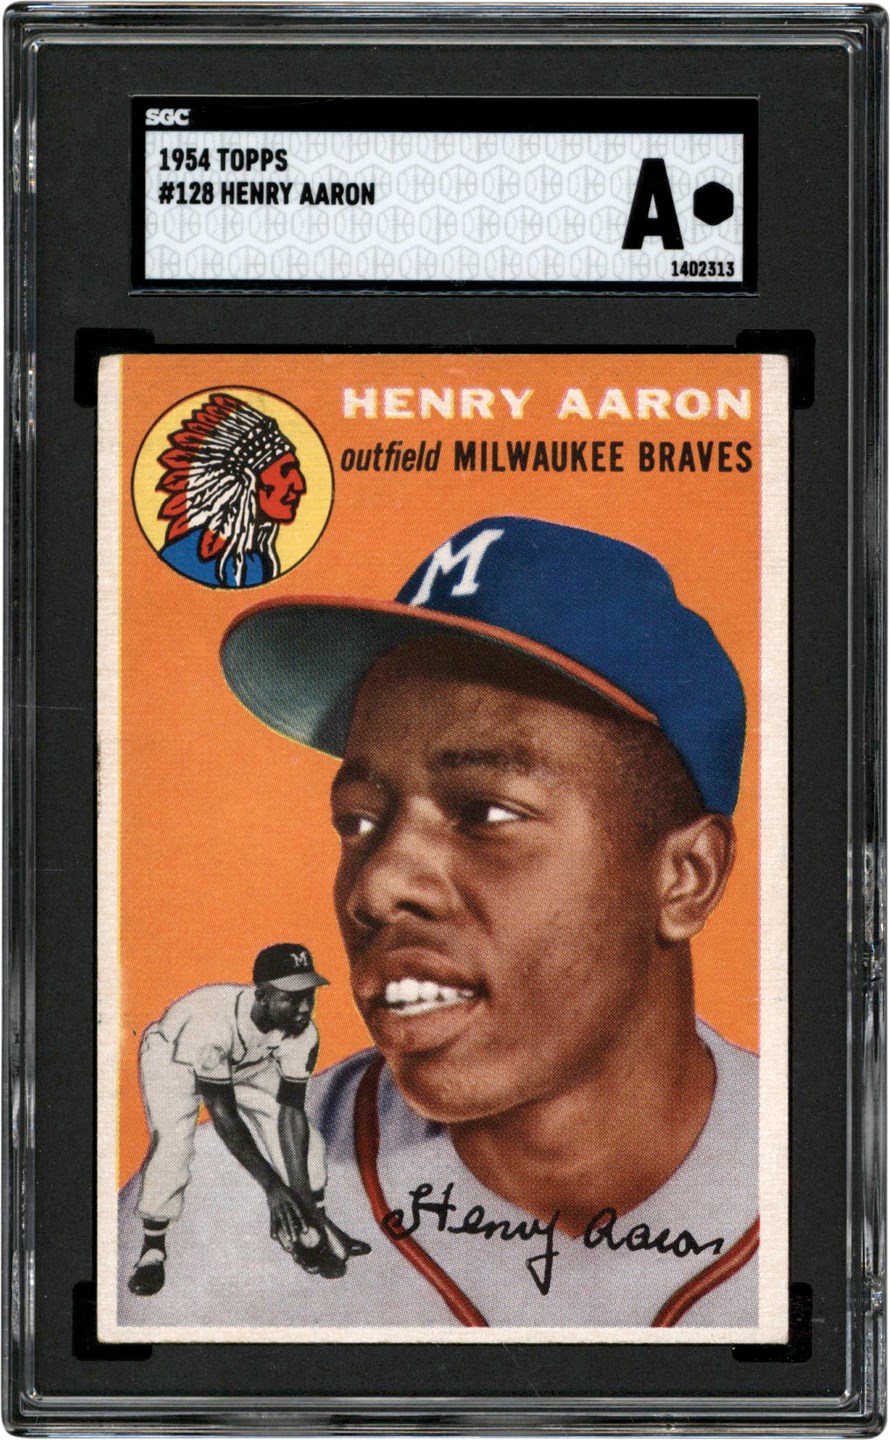 1954 Topps #128 Hank Aaron Rookie Card SGC Authentic